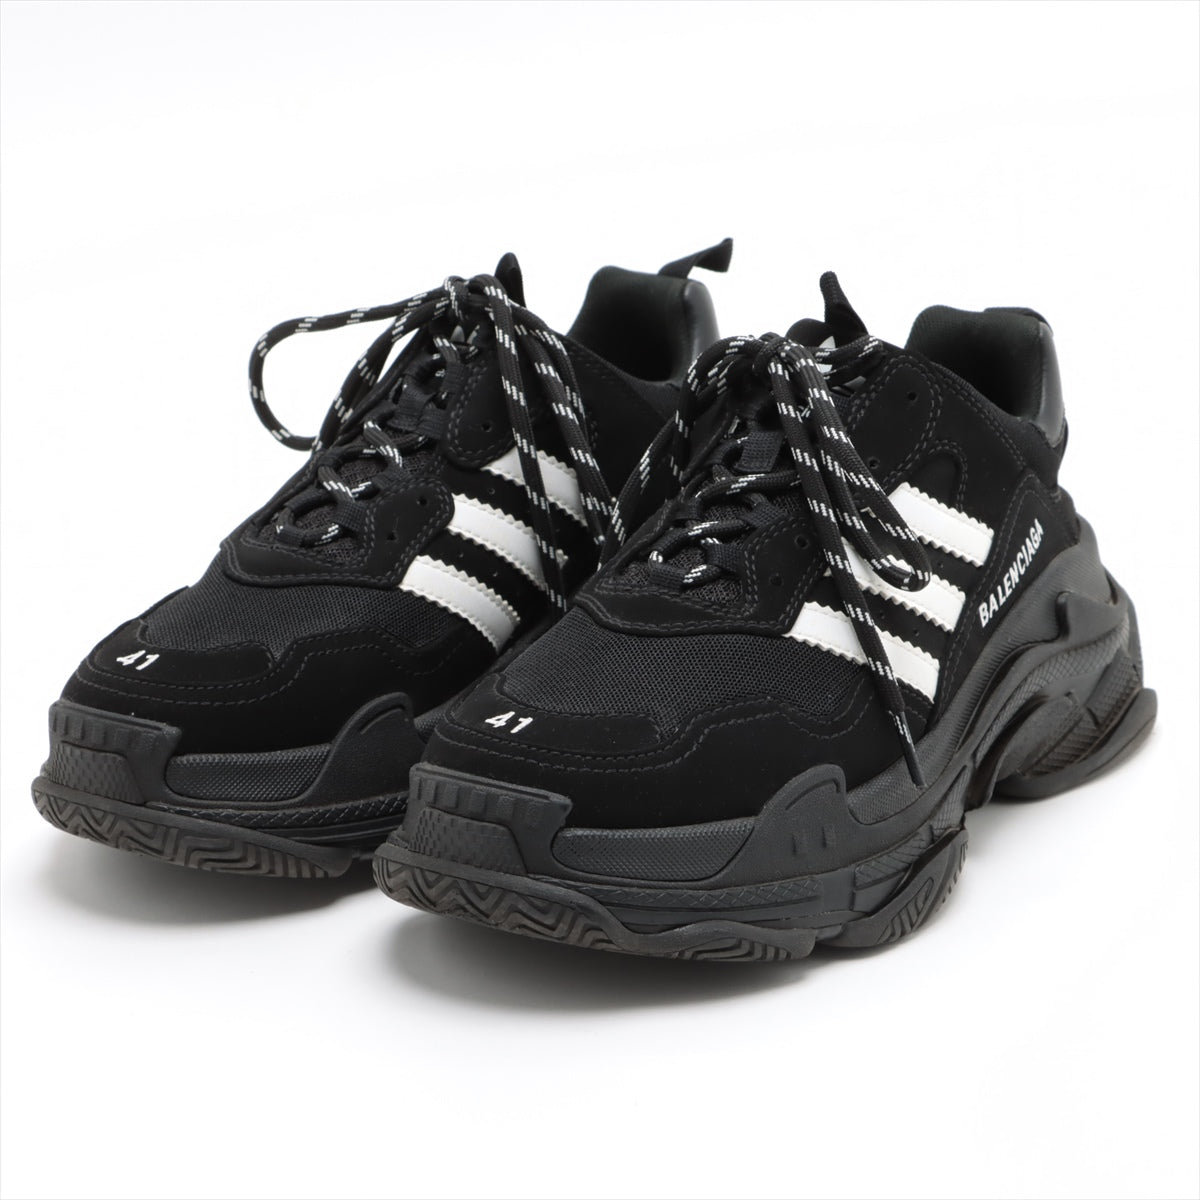 Balenciaga x adidas Triple s Mesh x leather Sneakers 41 Men's Black 712821